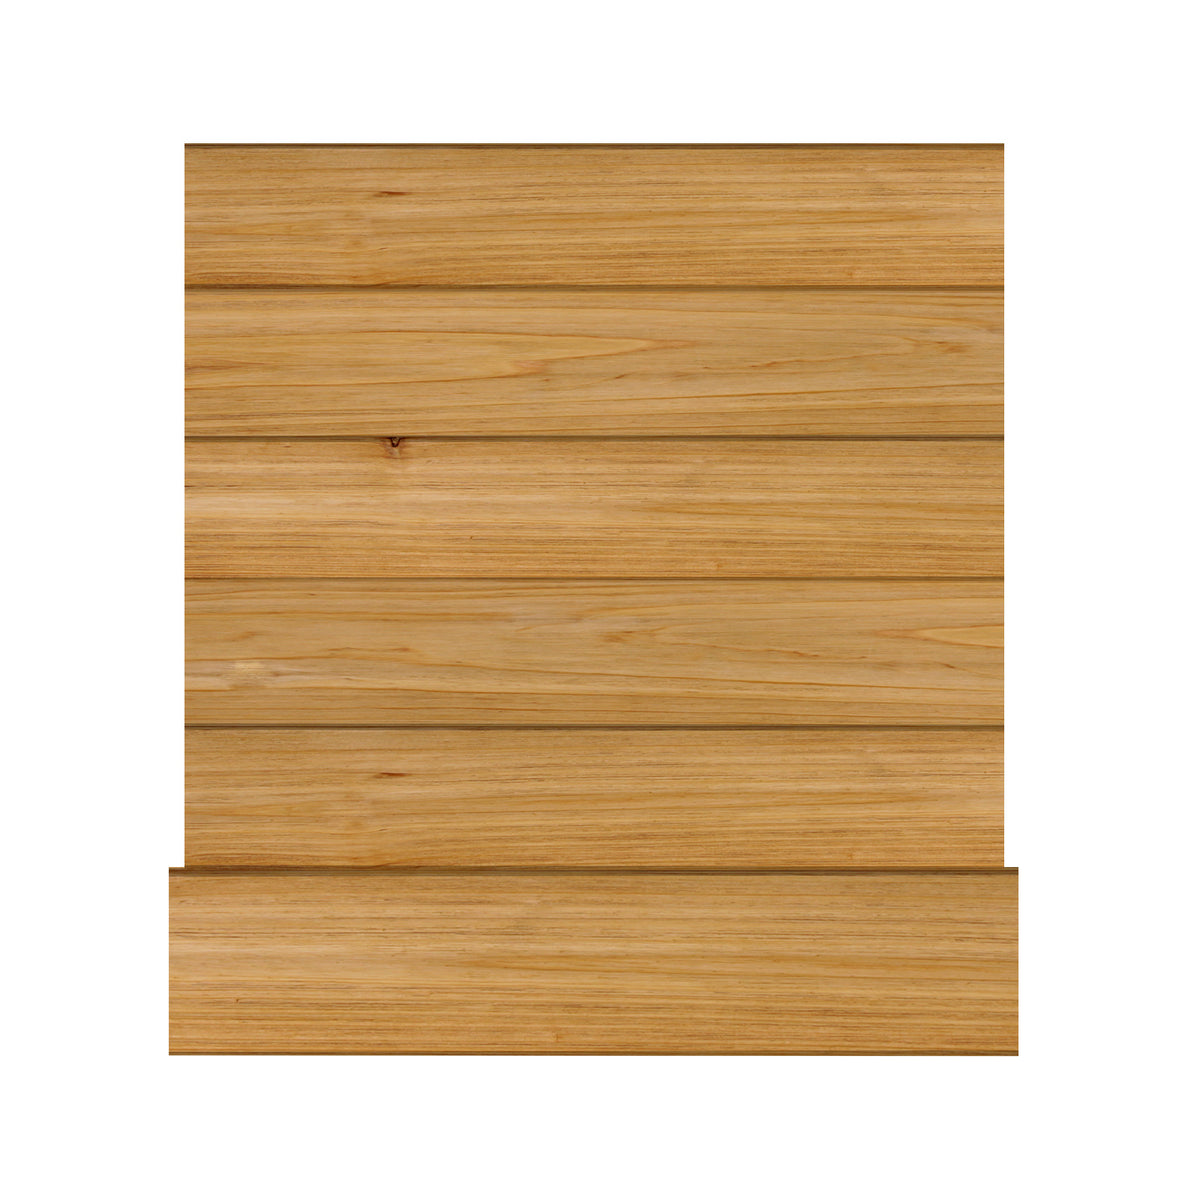 Custom Rustic Range Hood, Reclaimed Barn Wood Vent Hood with Insert Ventilator & Decorative Molding Trim, Modern B Series